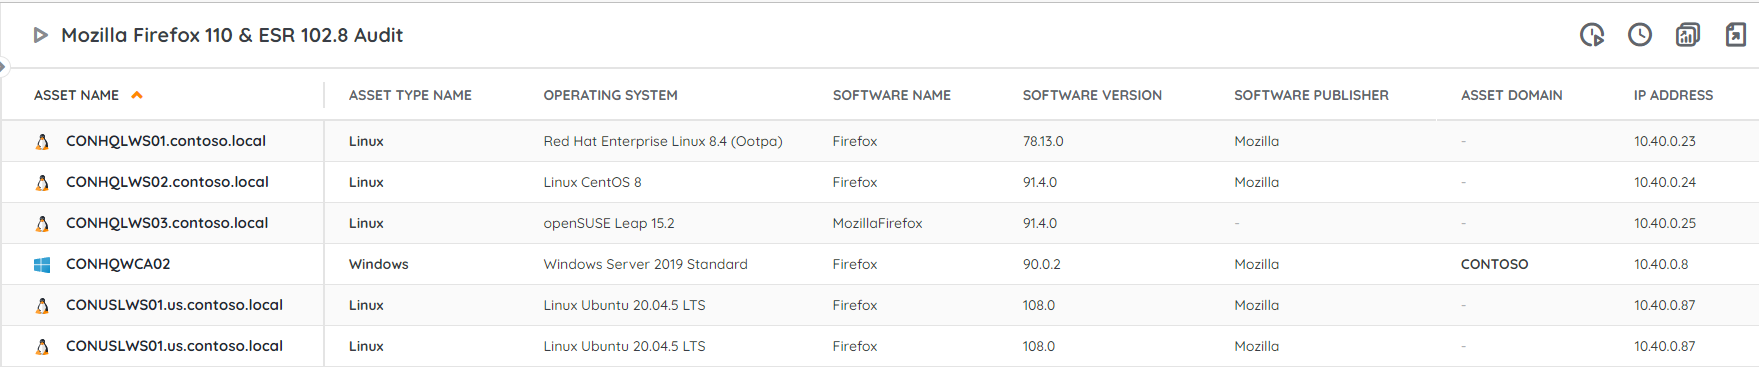 Firefox 110 Audit report